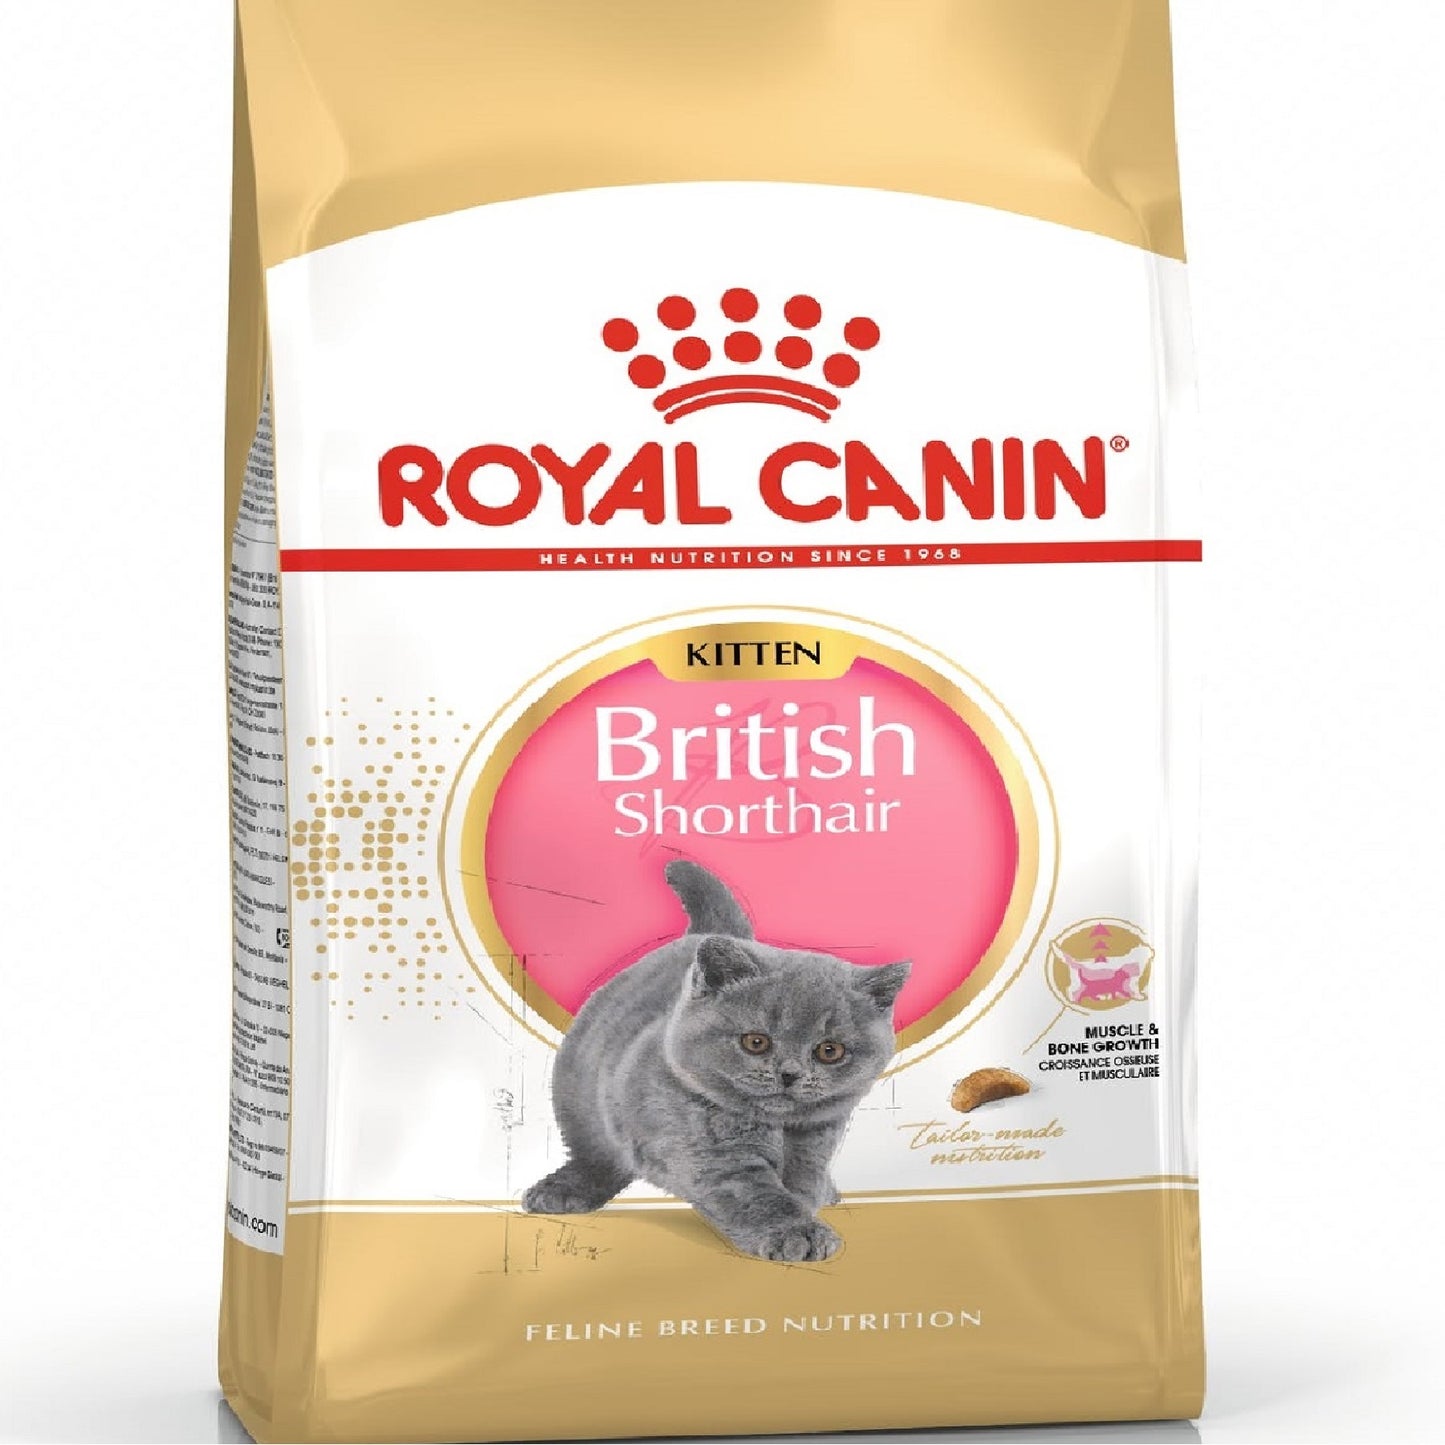 ROYAL CANIN - British Shorthair Kitten